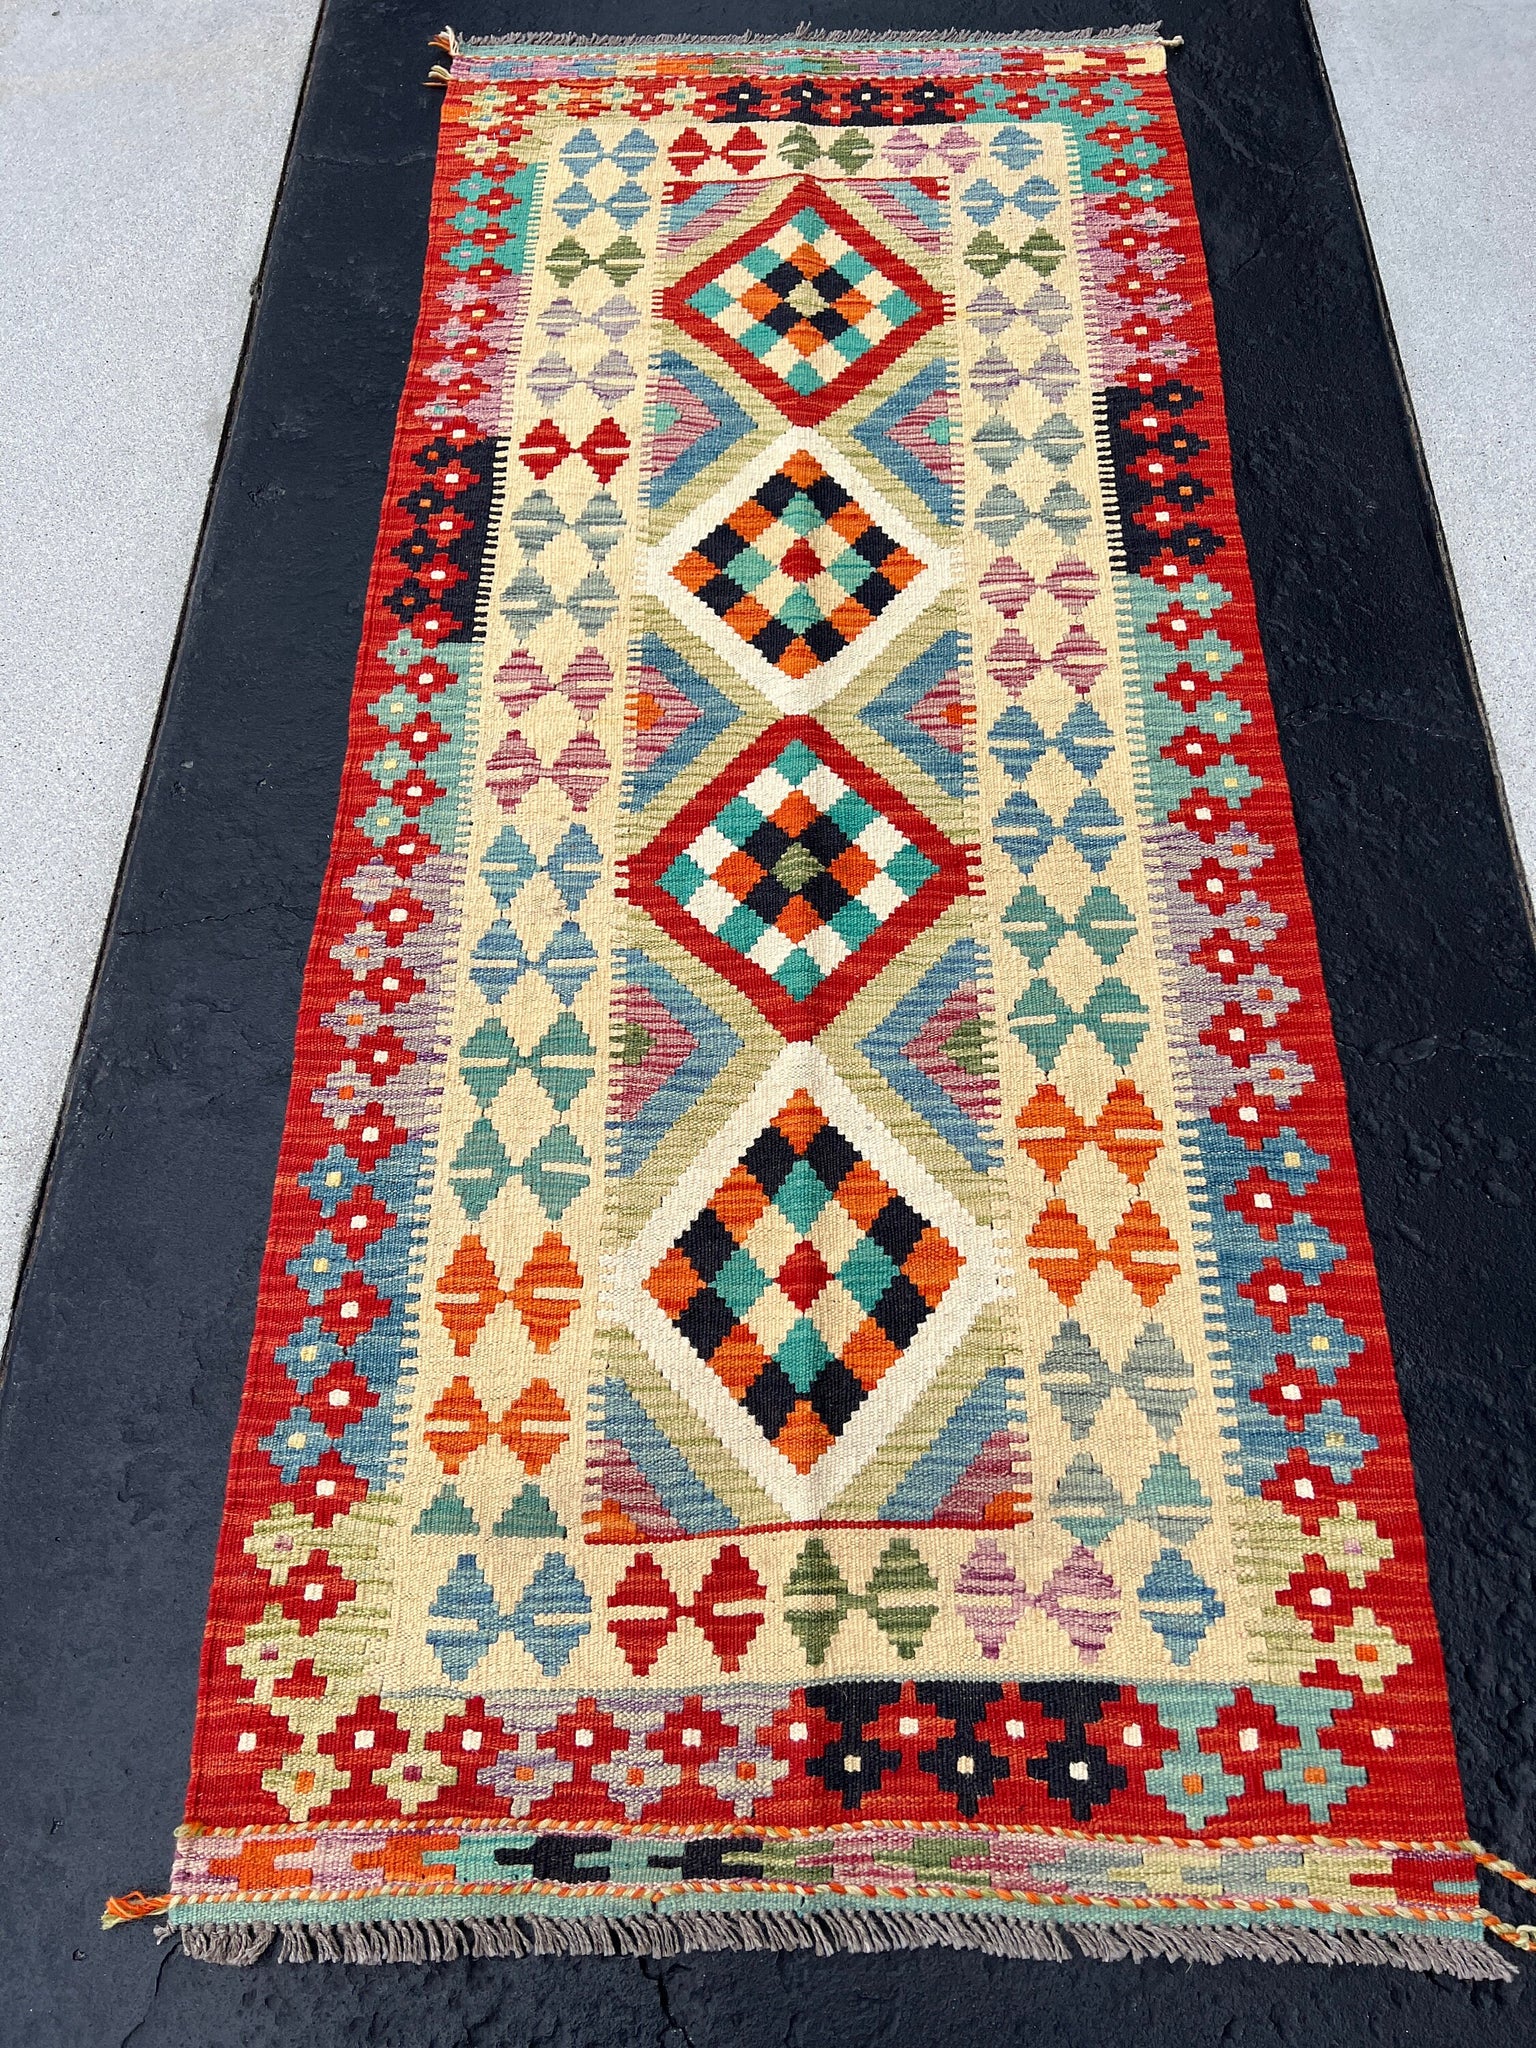 3x7 (100x200) Handmade Afghan Kilim Runner Rug | Cream Crimson Red Olive Green Teal Mauve Baby Denim Blue Grey Orange Black | Flatweave Wool